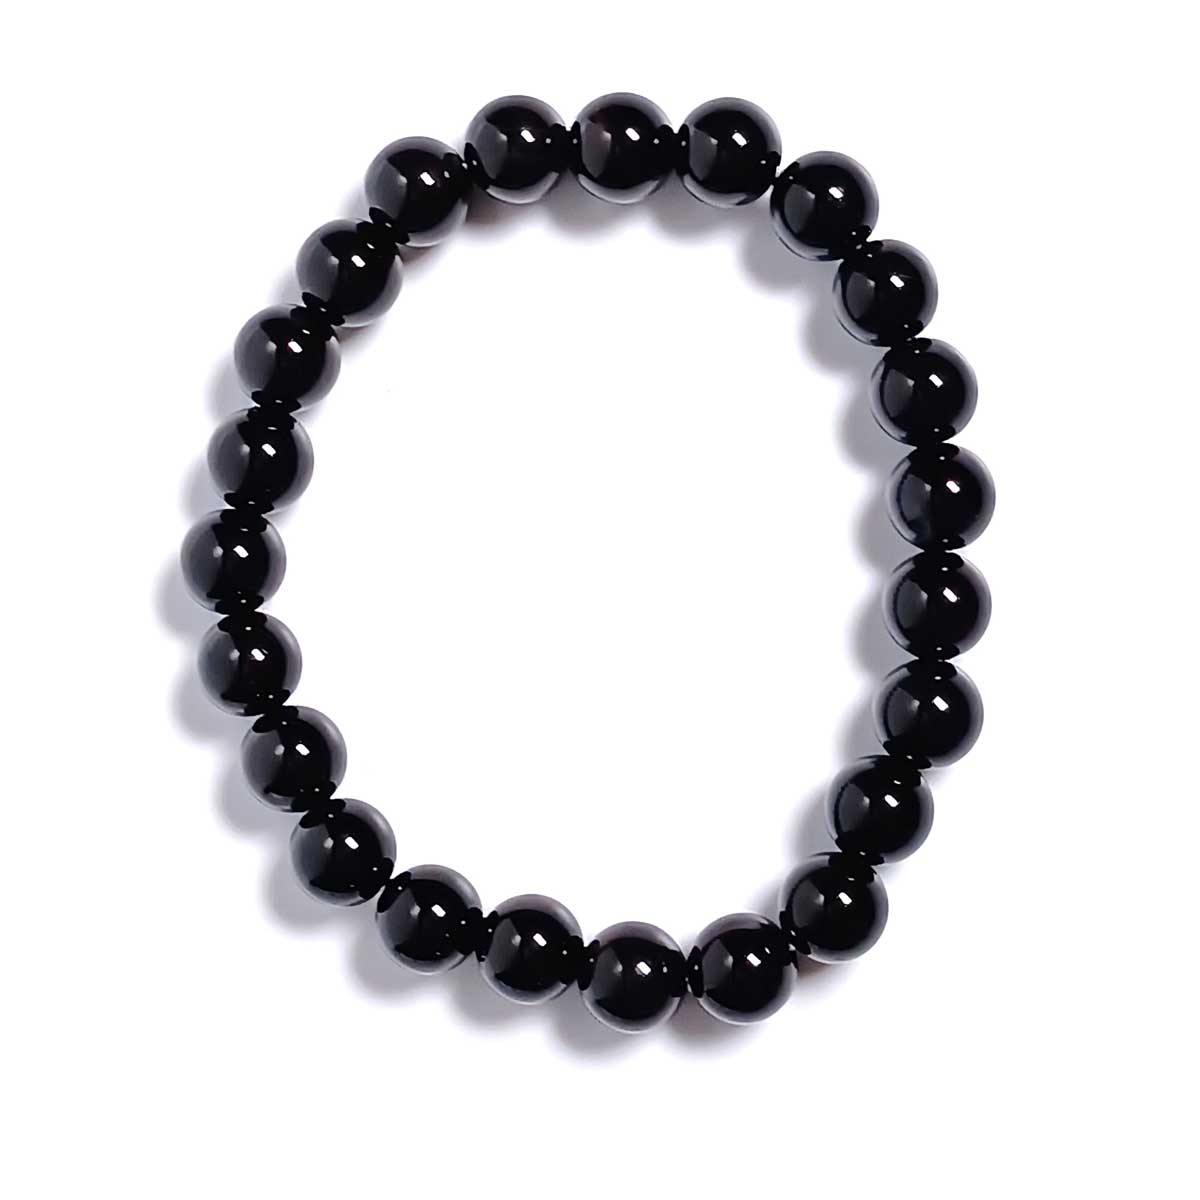 Black Onyx 10 mm Round Bead Bracelet